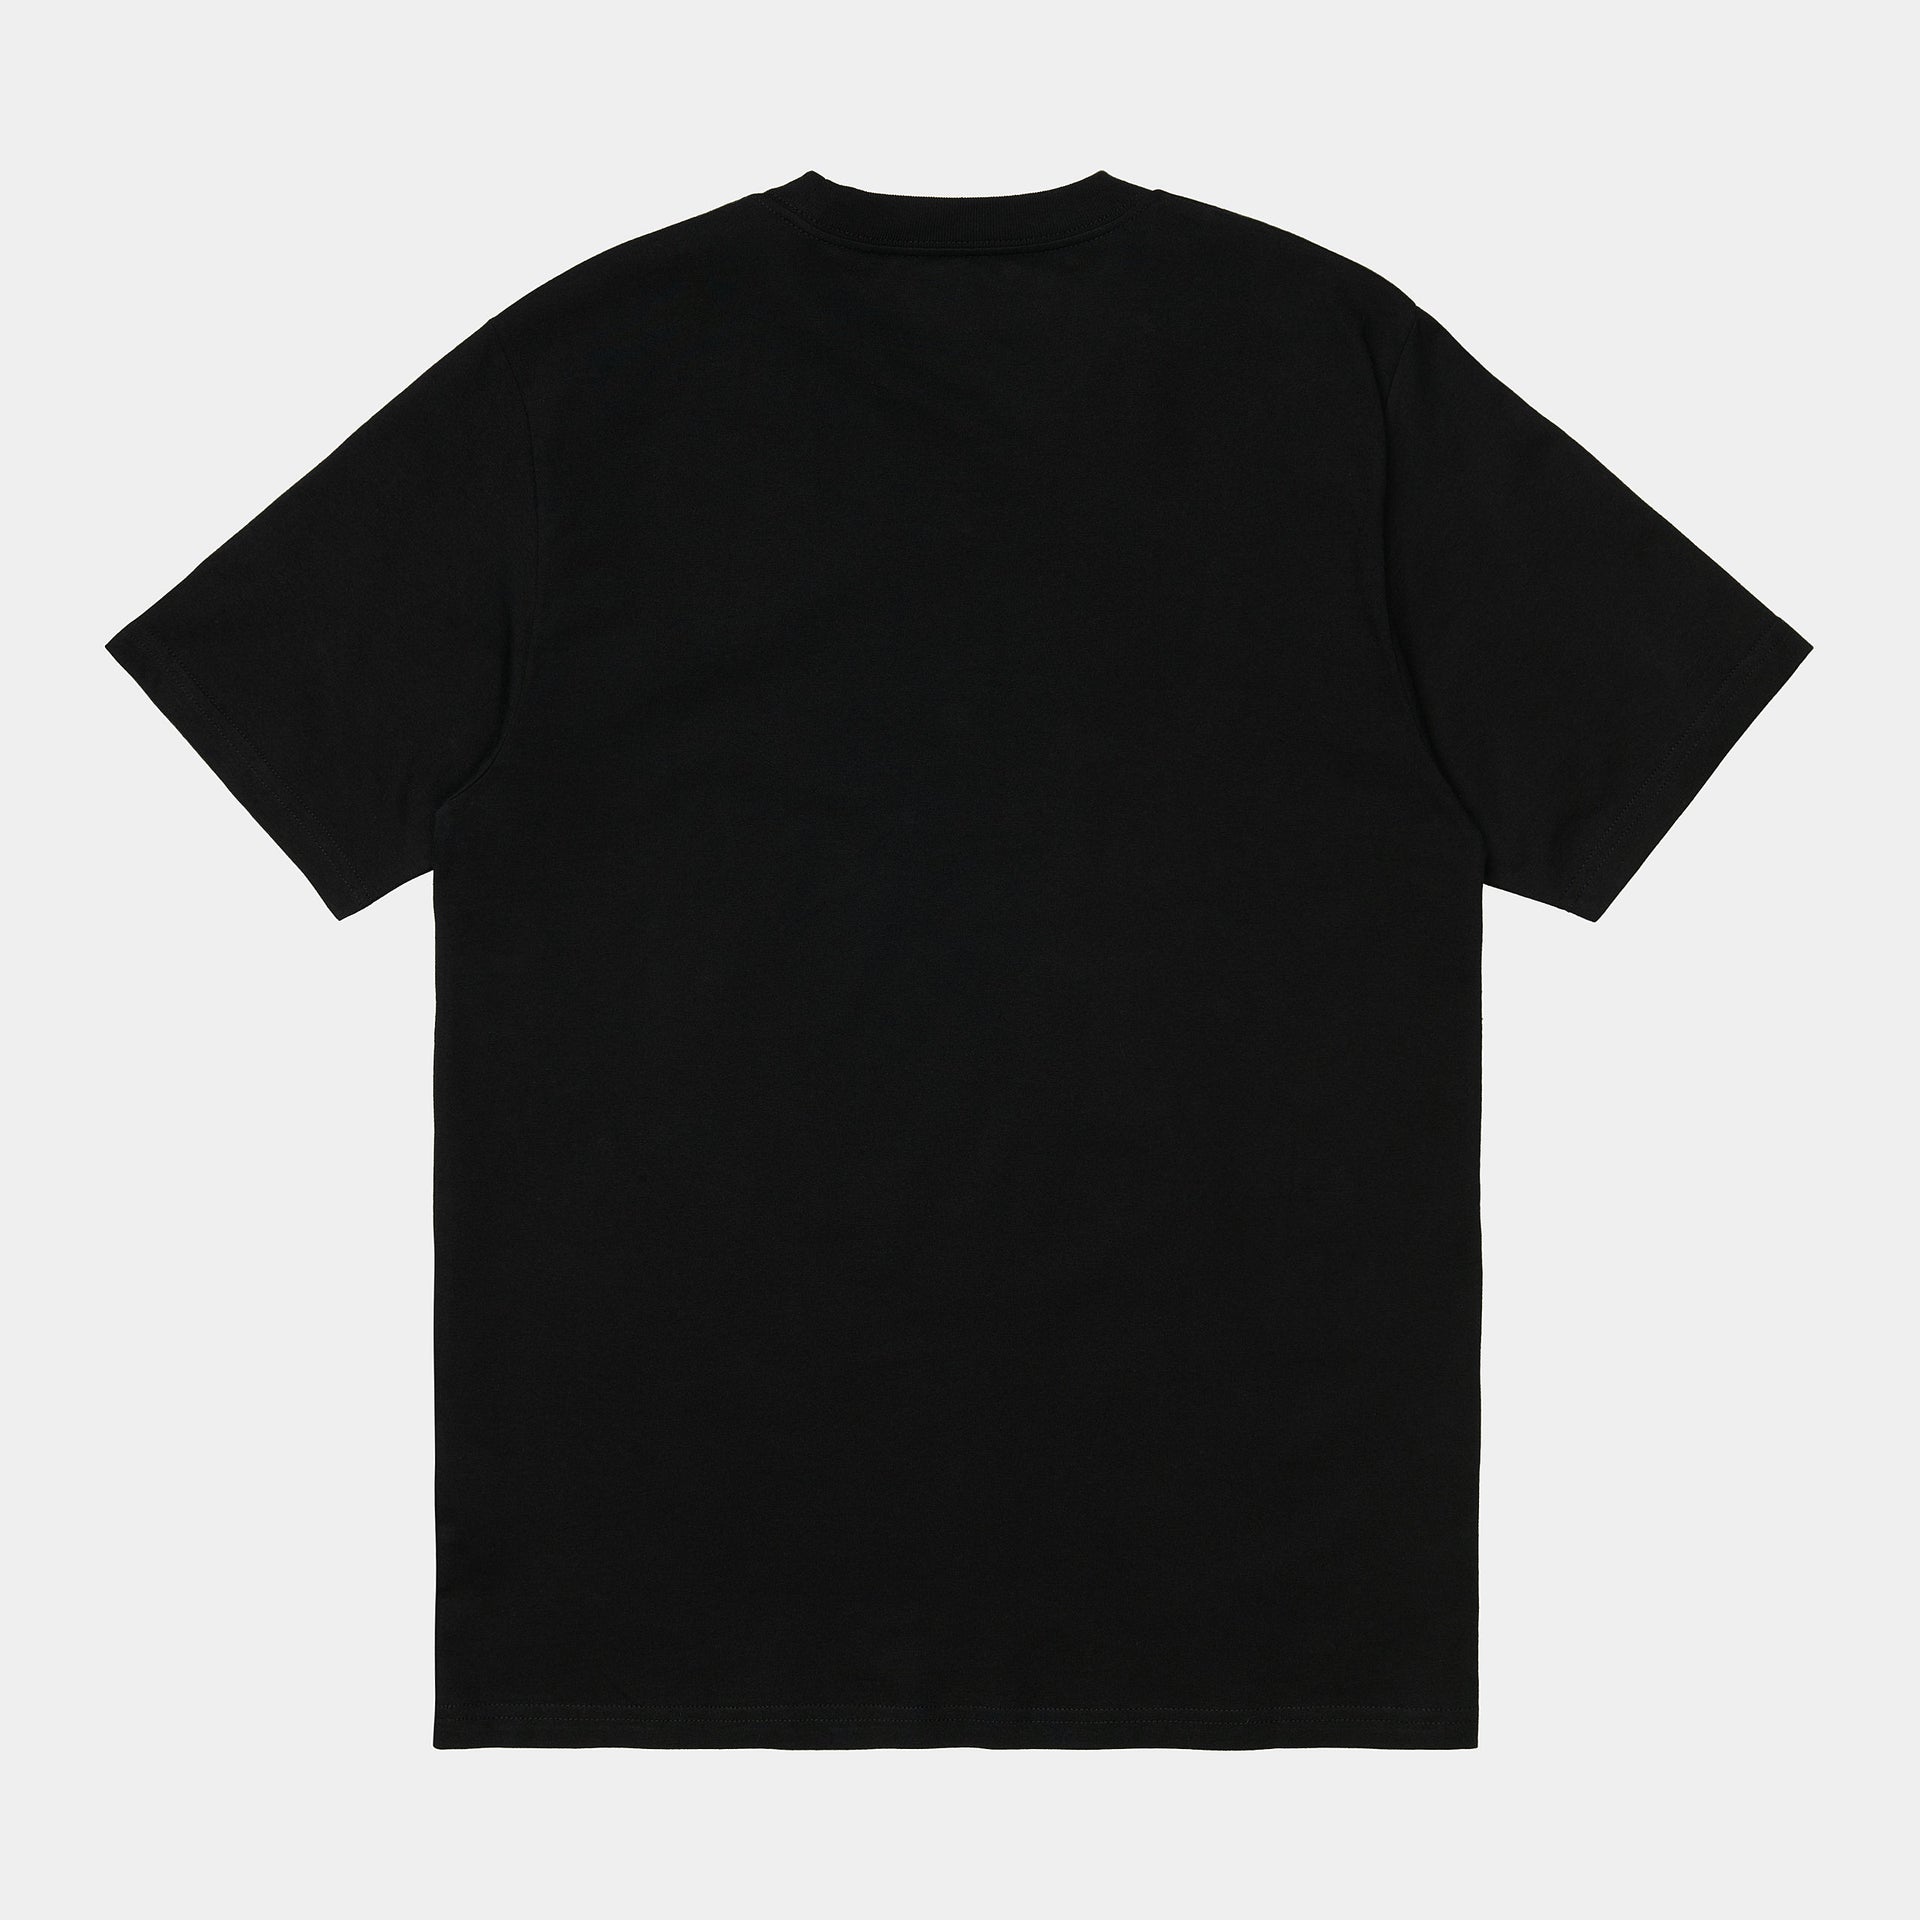 S/S Fortune T-Shirt Black